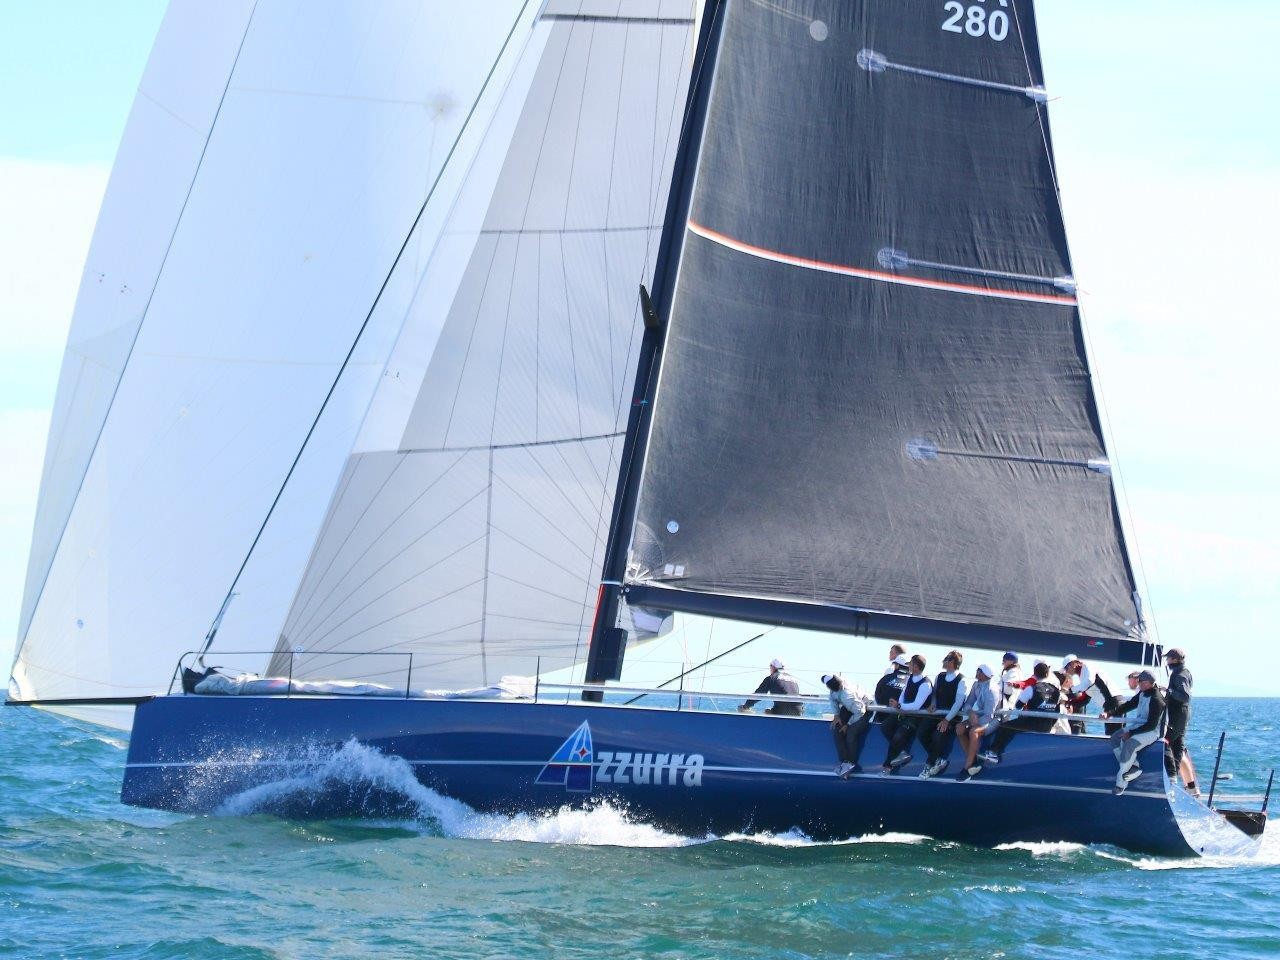 Azzurra 2018 first sail in Valencia
ph. M. Capitani/Azzurra©